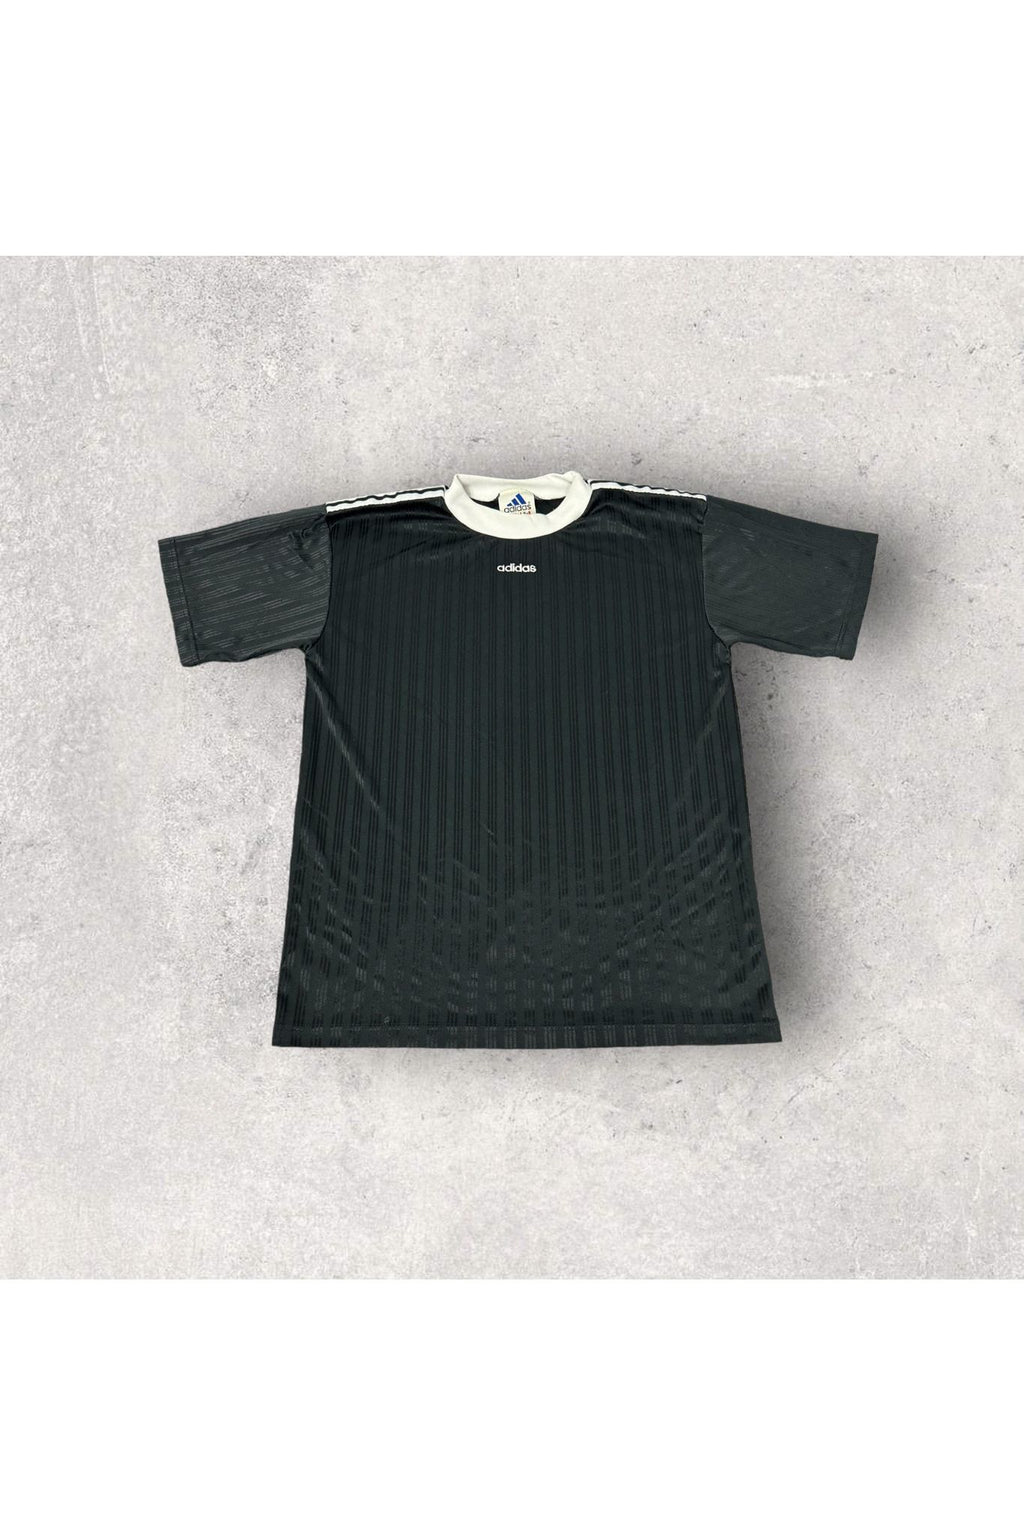 Vintage Adidas Soccer/Activewear Jersey/Shirt- L